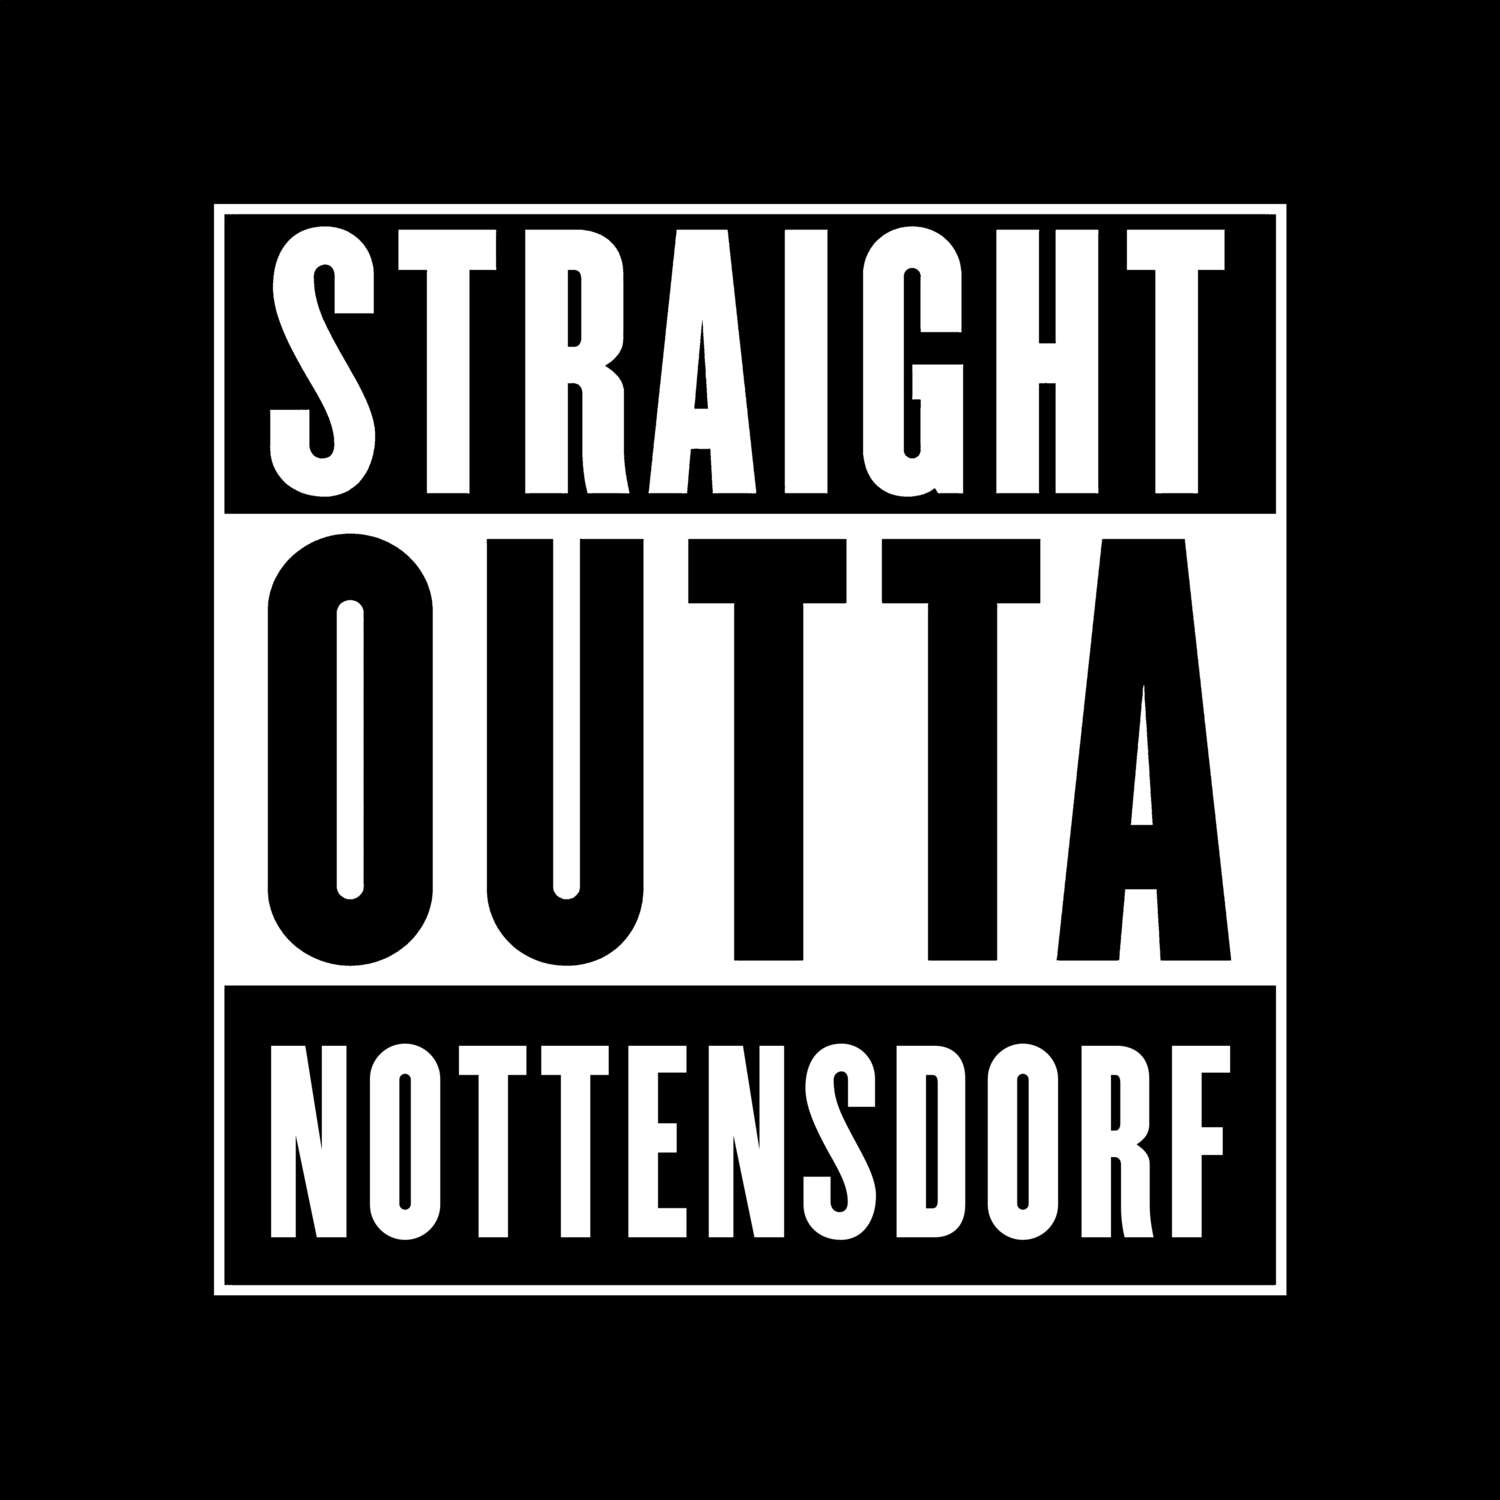 Nottensdorf T-Shirt »Straight Outta«